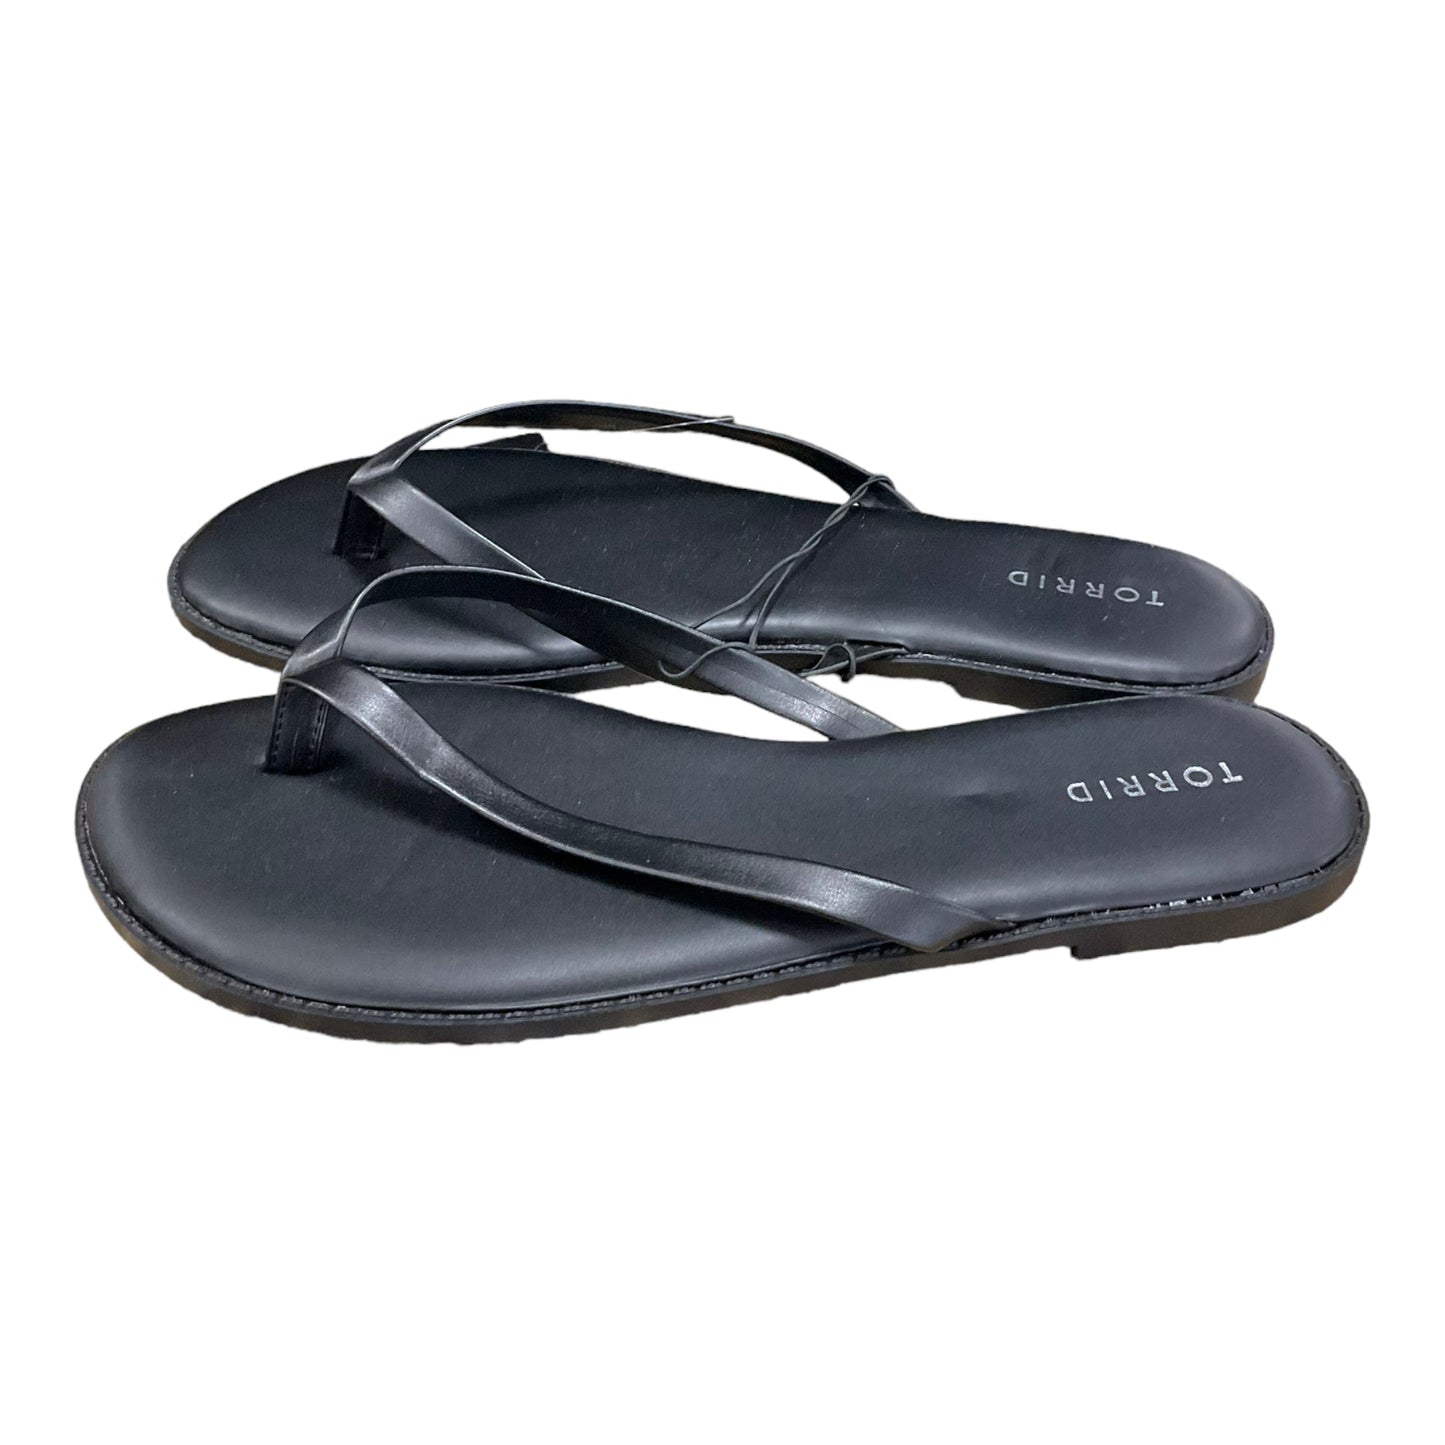 Sandals Flip Flops By Torrid  Size: 11.5